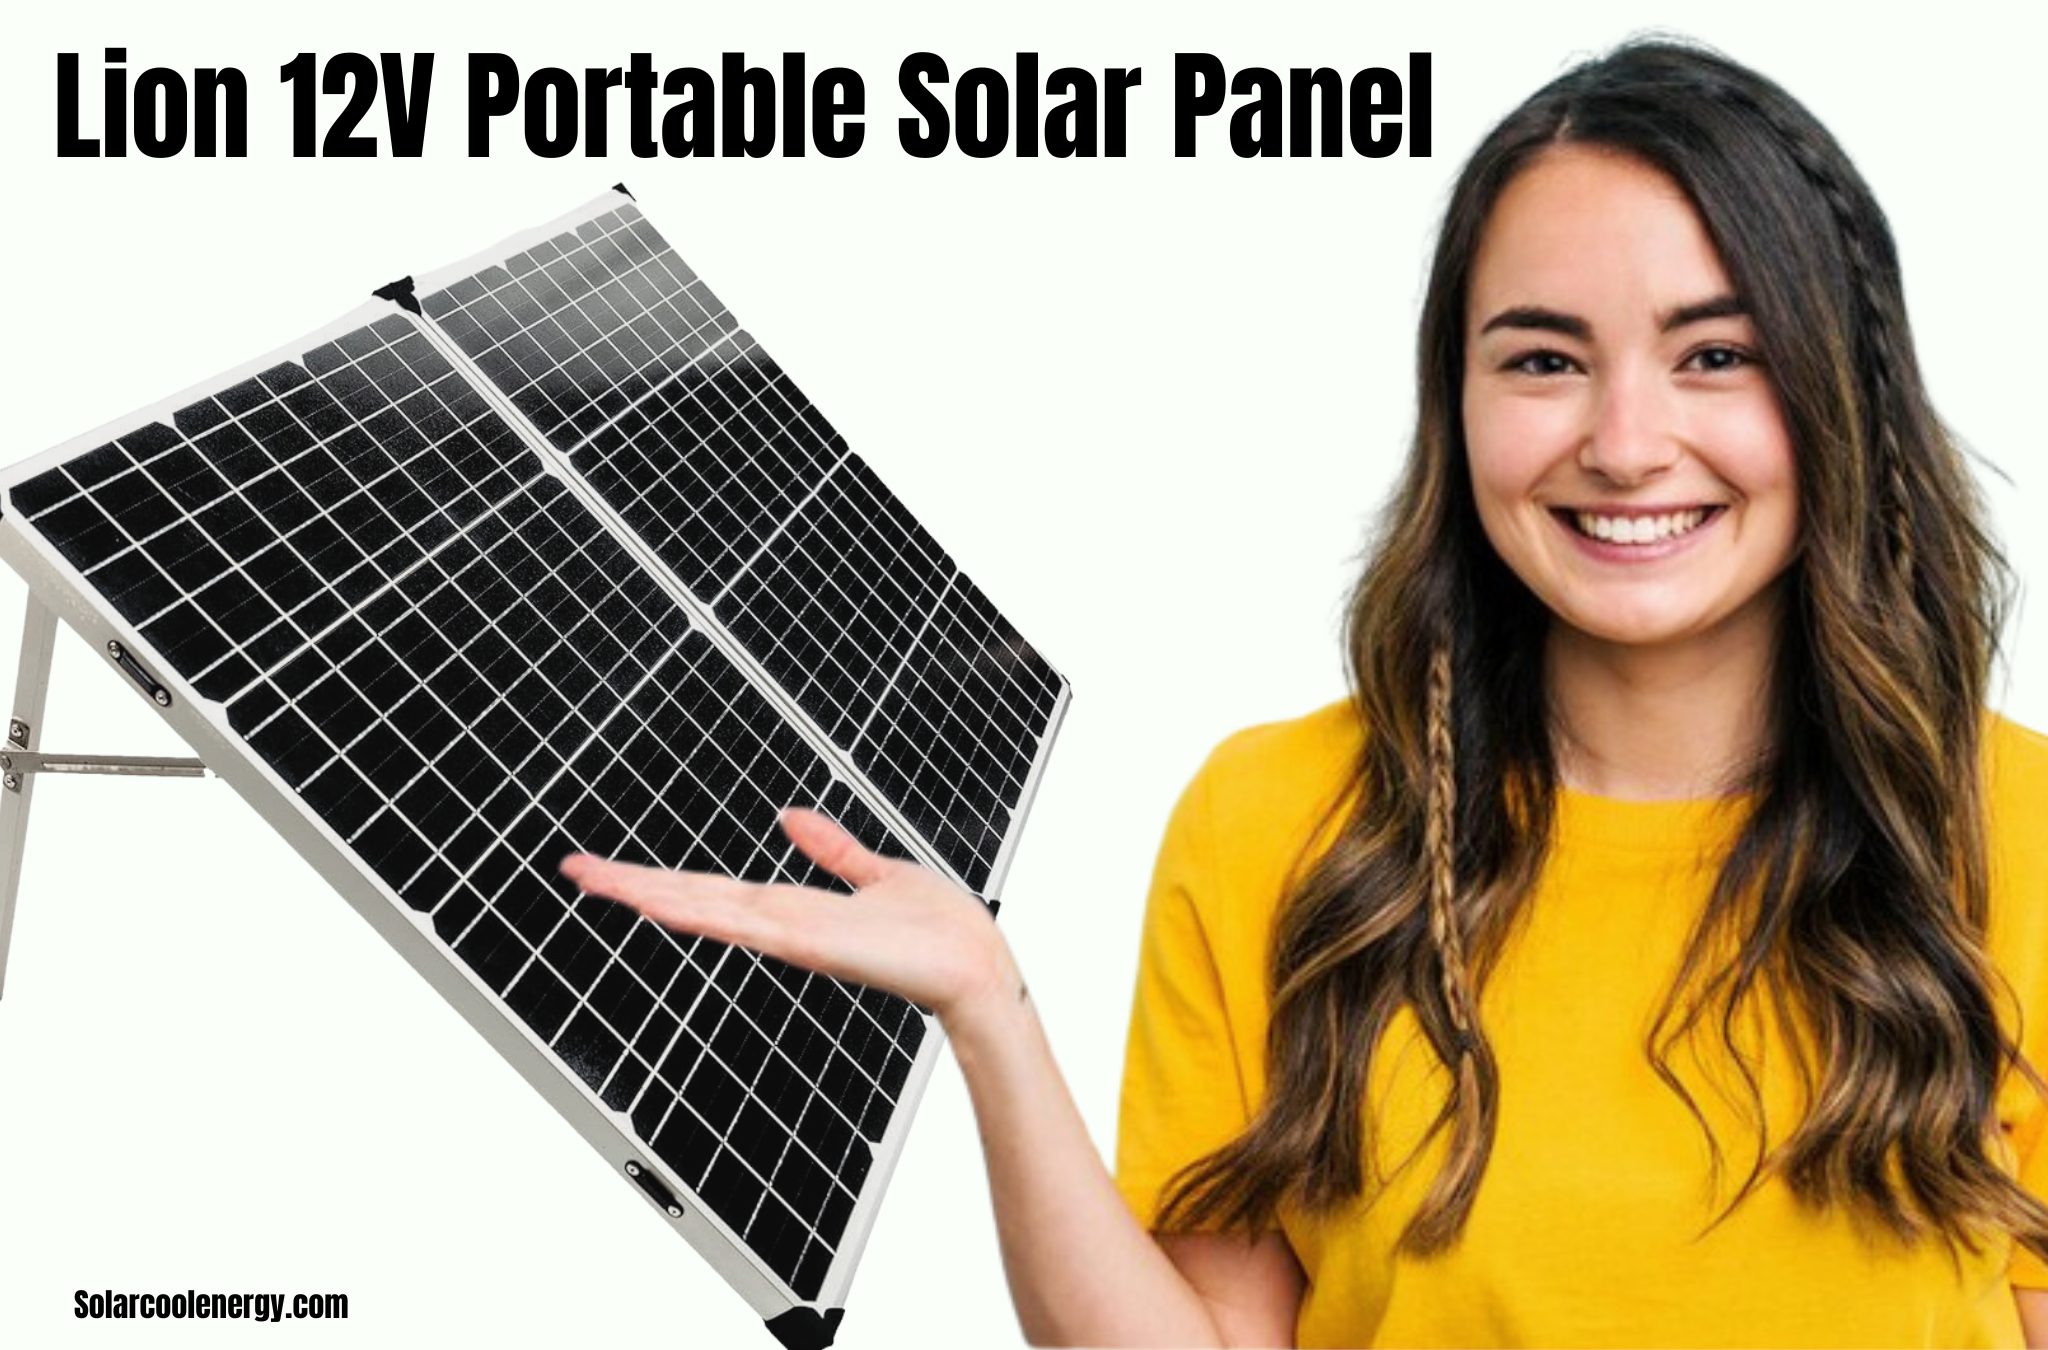 Lion-12V-Portable-Solar-Panel-1